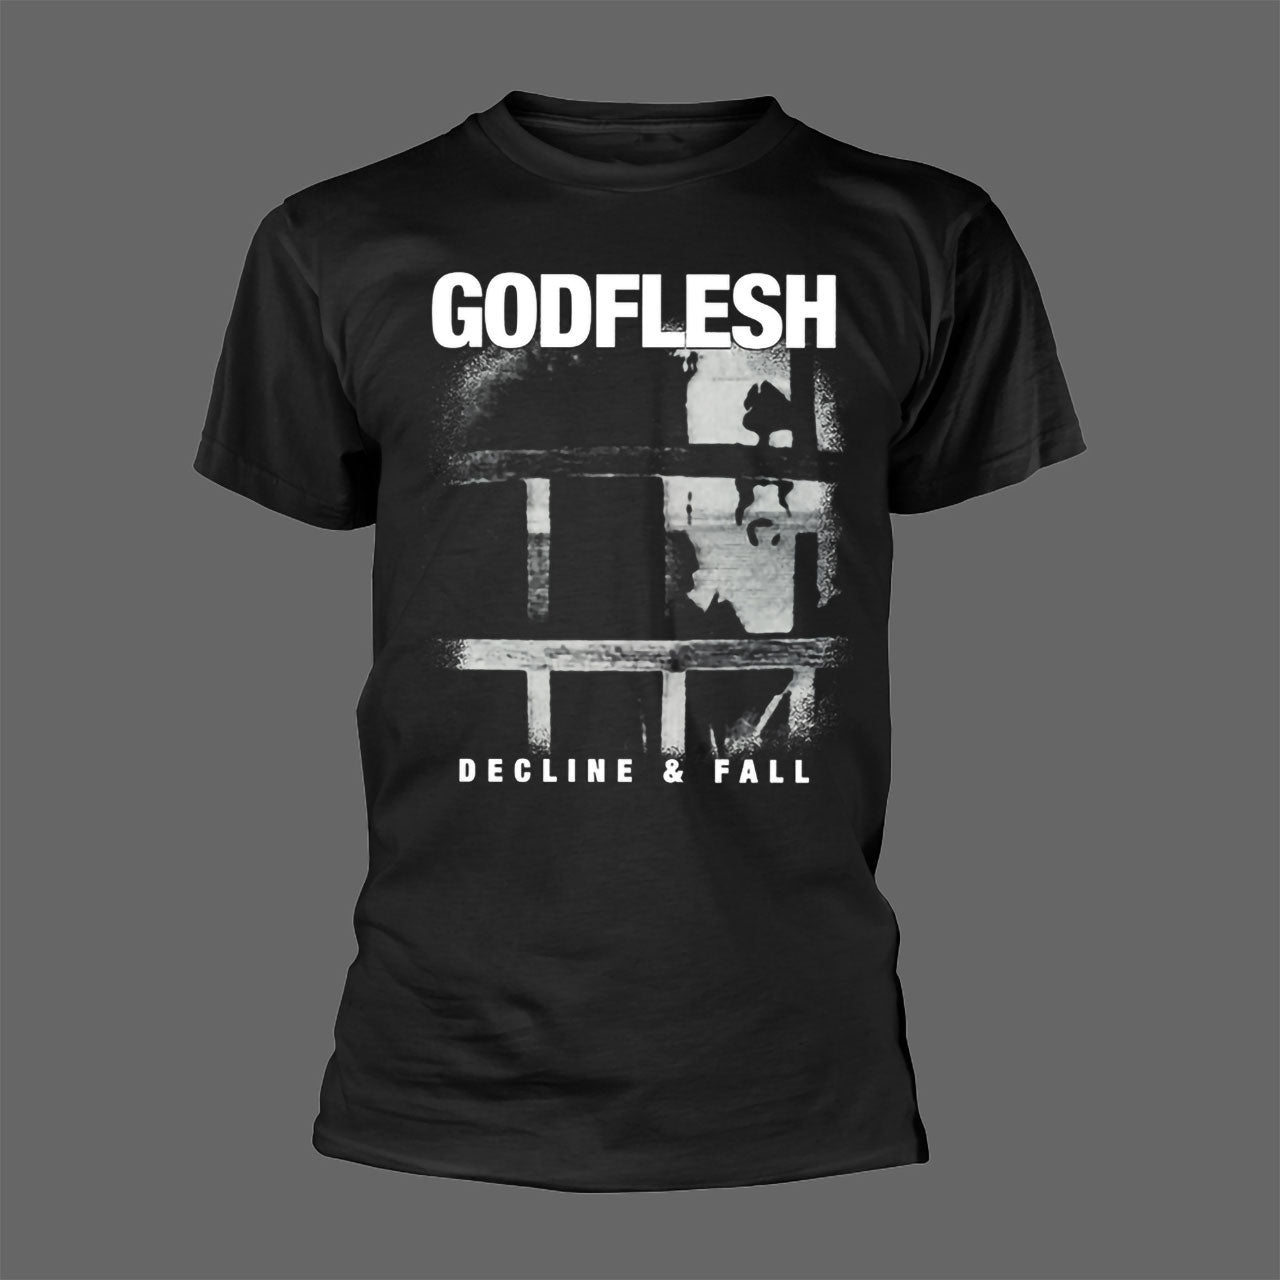 Godflesh - Decline & Fall (T-Shirt)